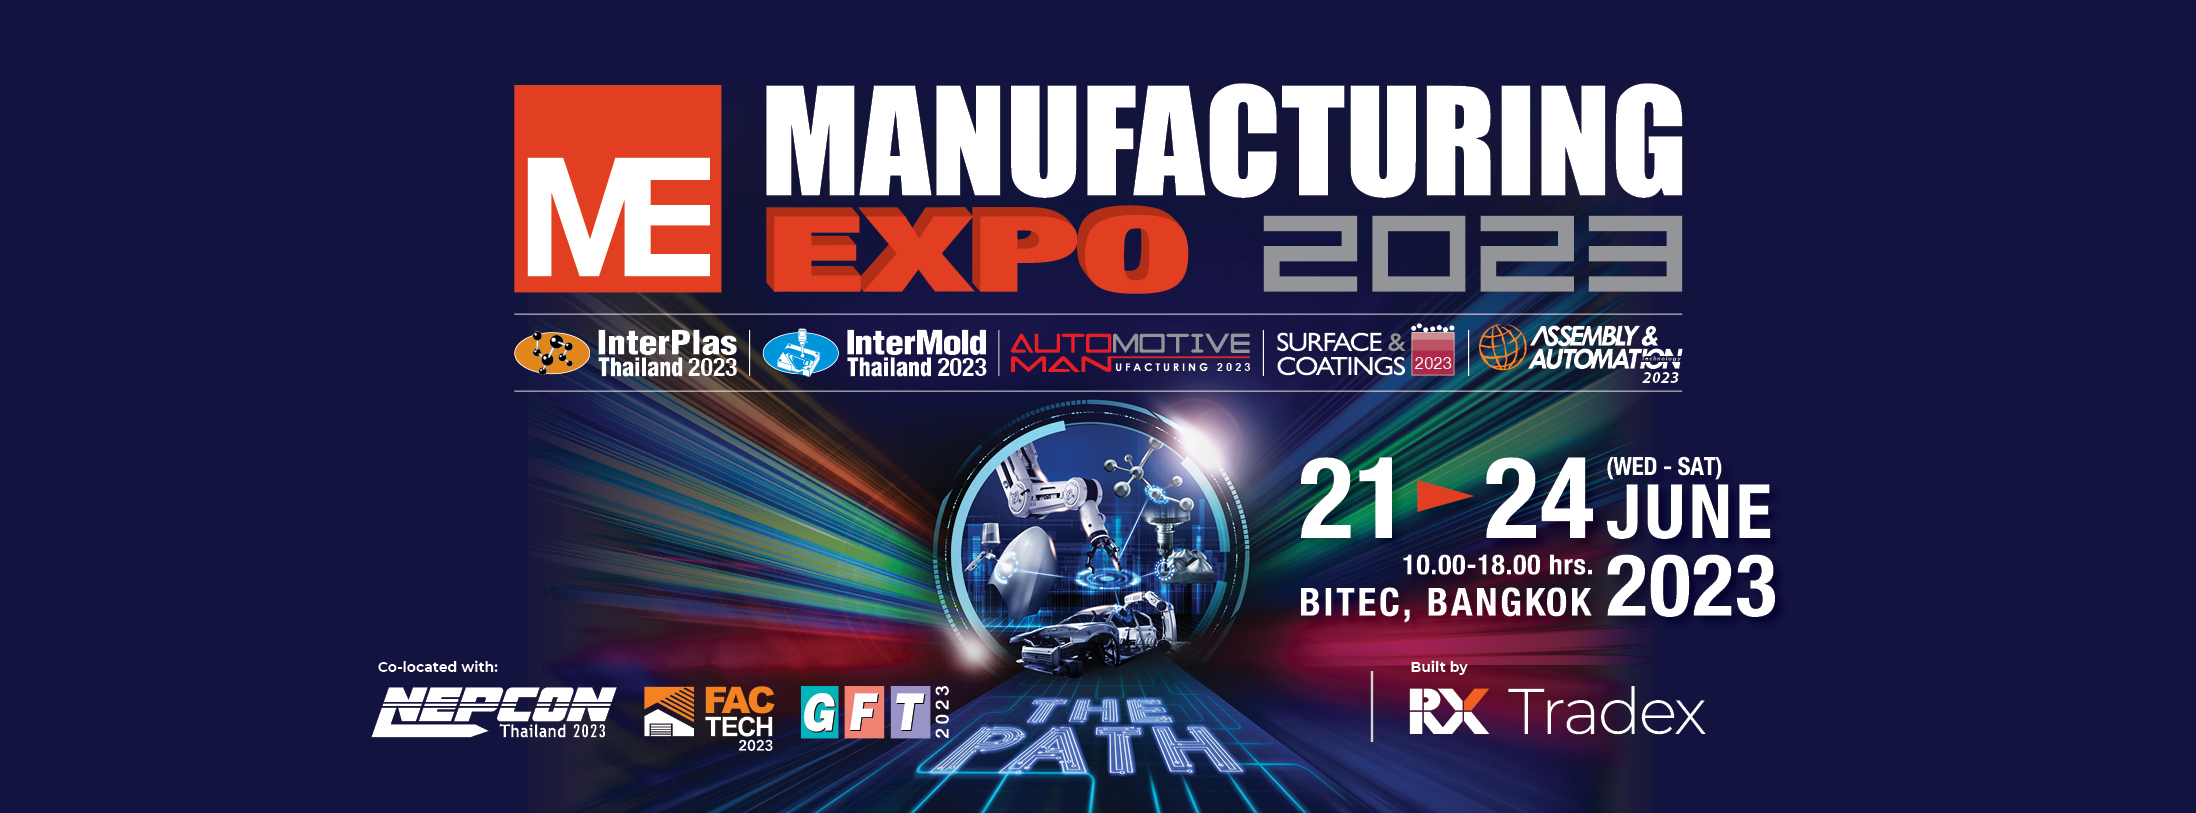 Manufacturing Expo 2023, Bangkok Thailand, Bangkok, Thailand